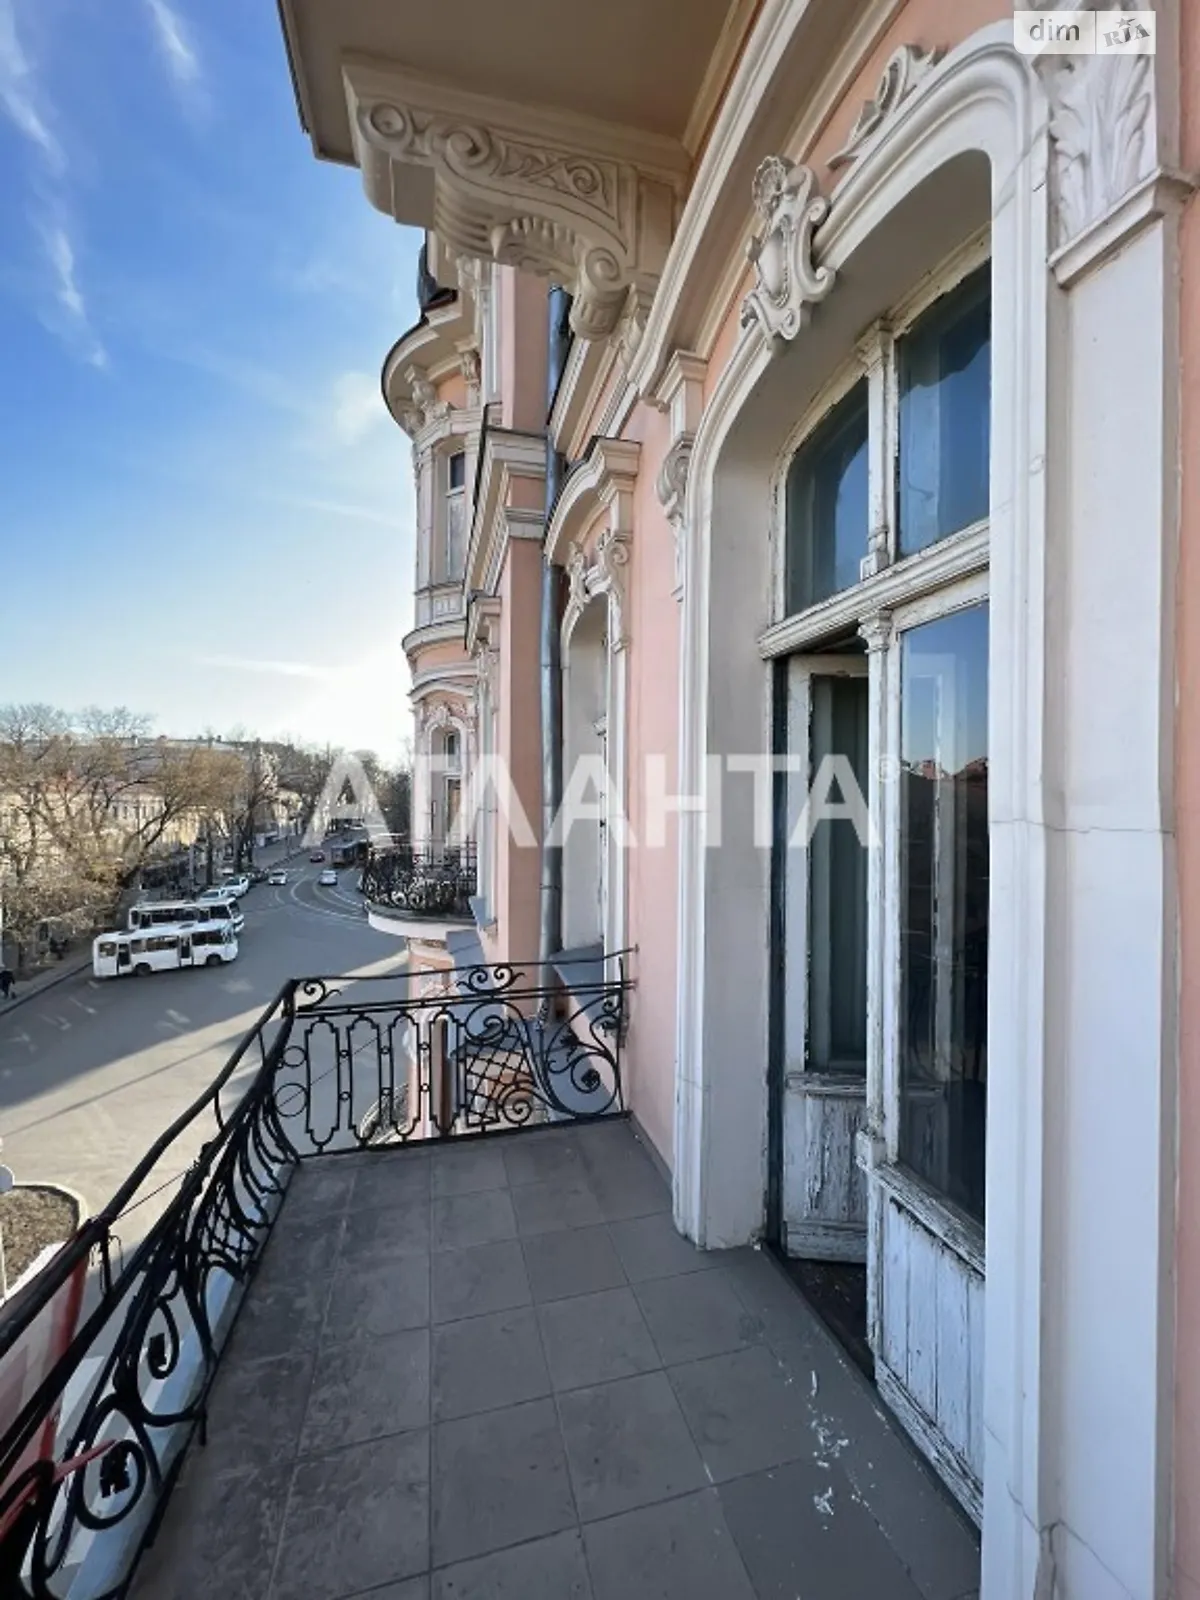 Продается комната 60 кв. м в Одессе, цена: 40000 $ - фото 1